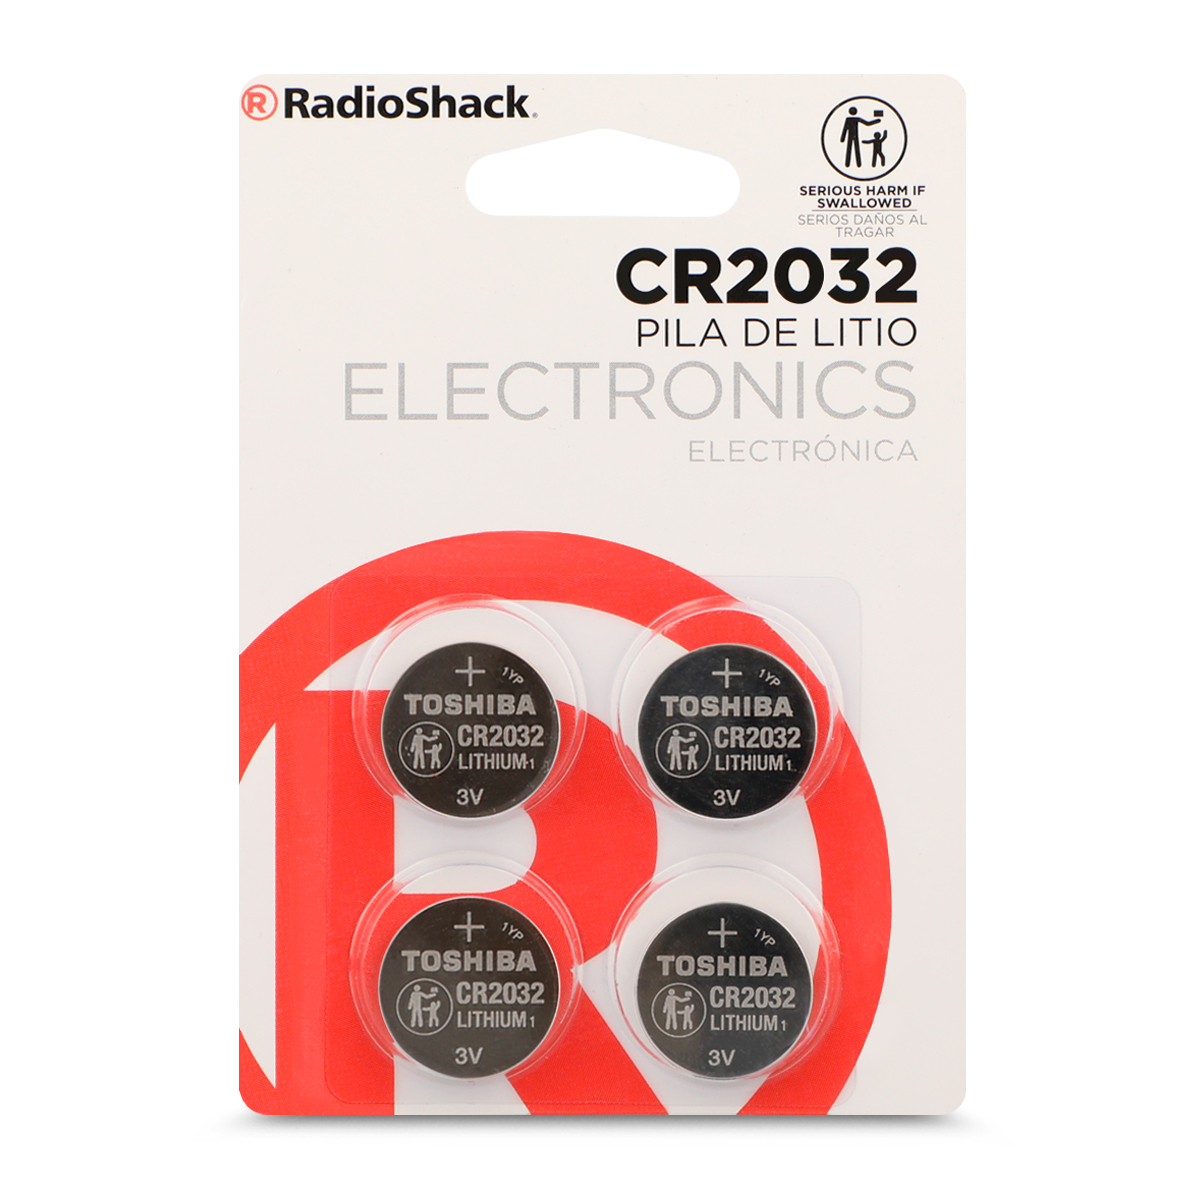 Pila de Botón Litio CR 1620 RadioShack Paquete 1 pieza